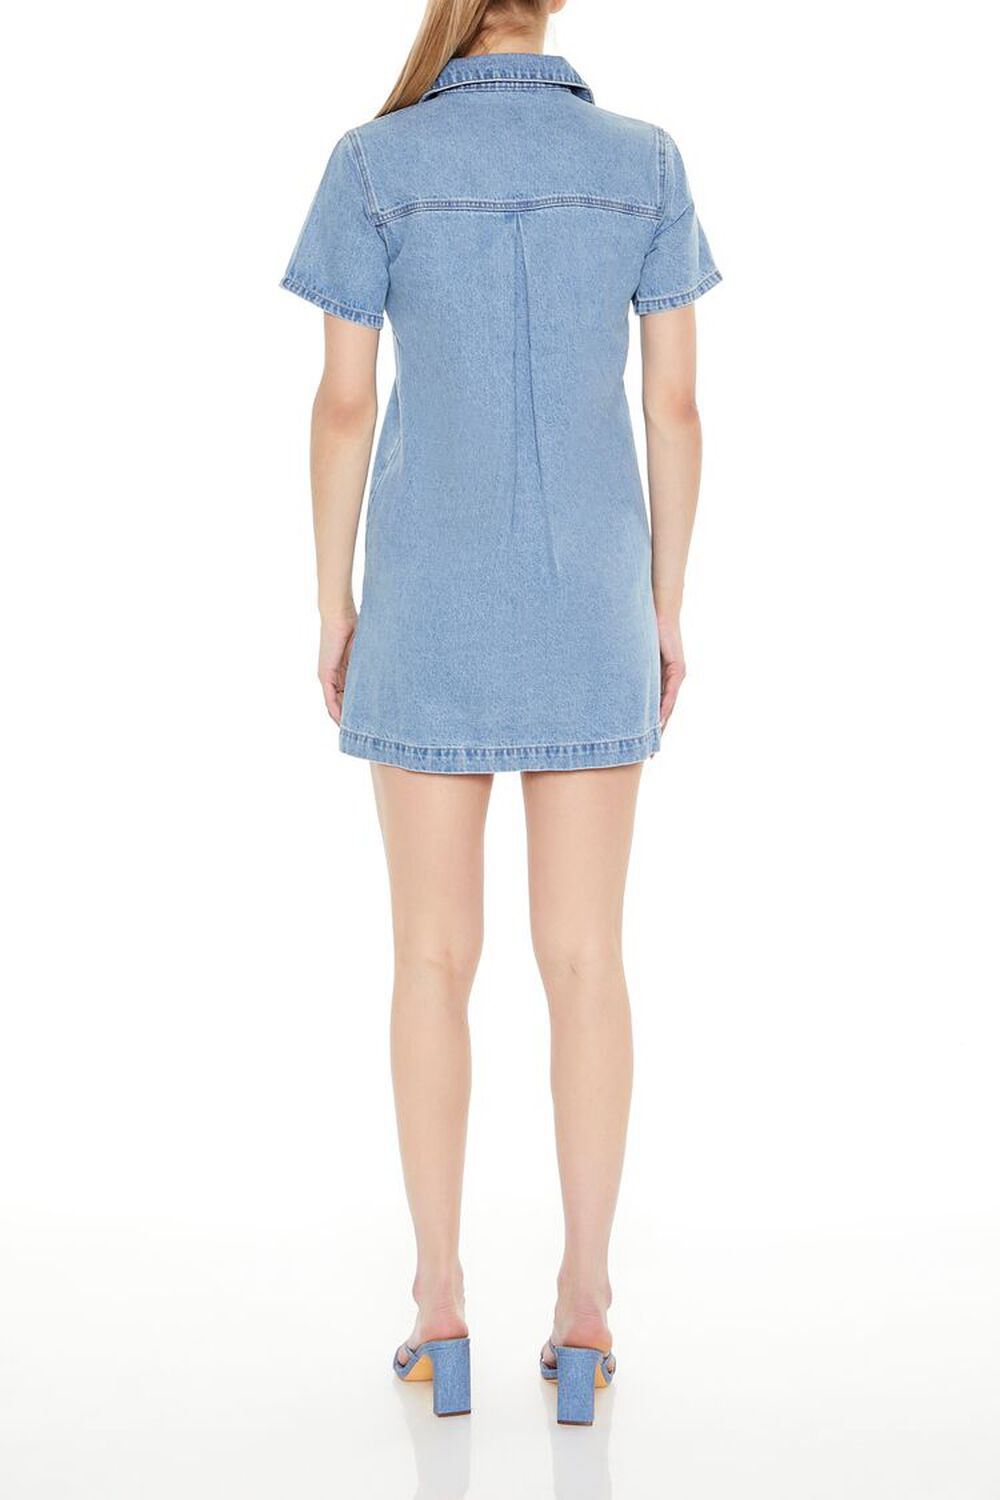 LIGHT DENIM Denim Zip-Up Mini Shirt Dress, image 3